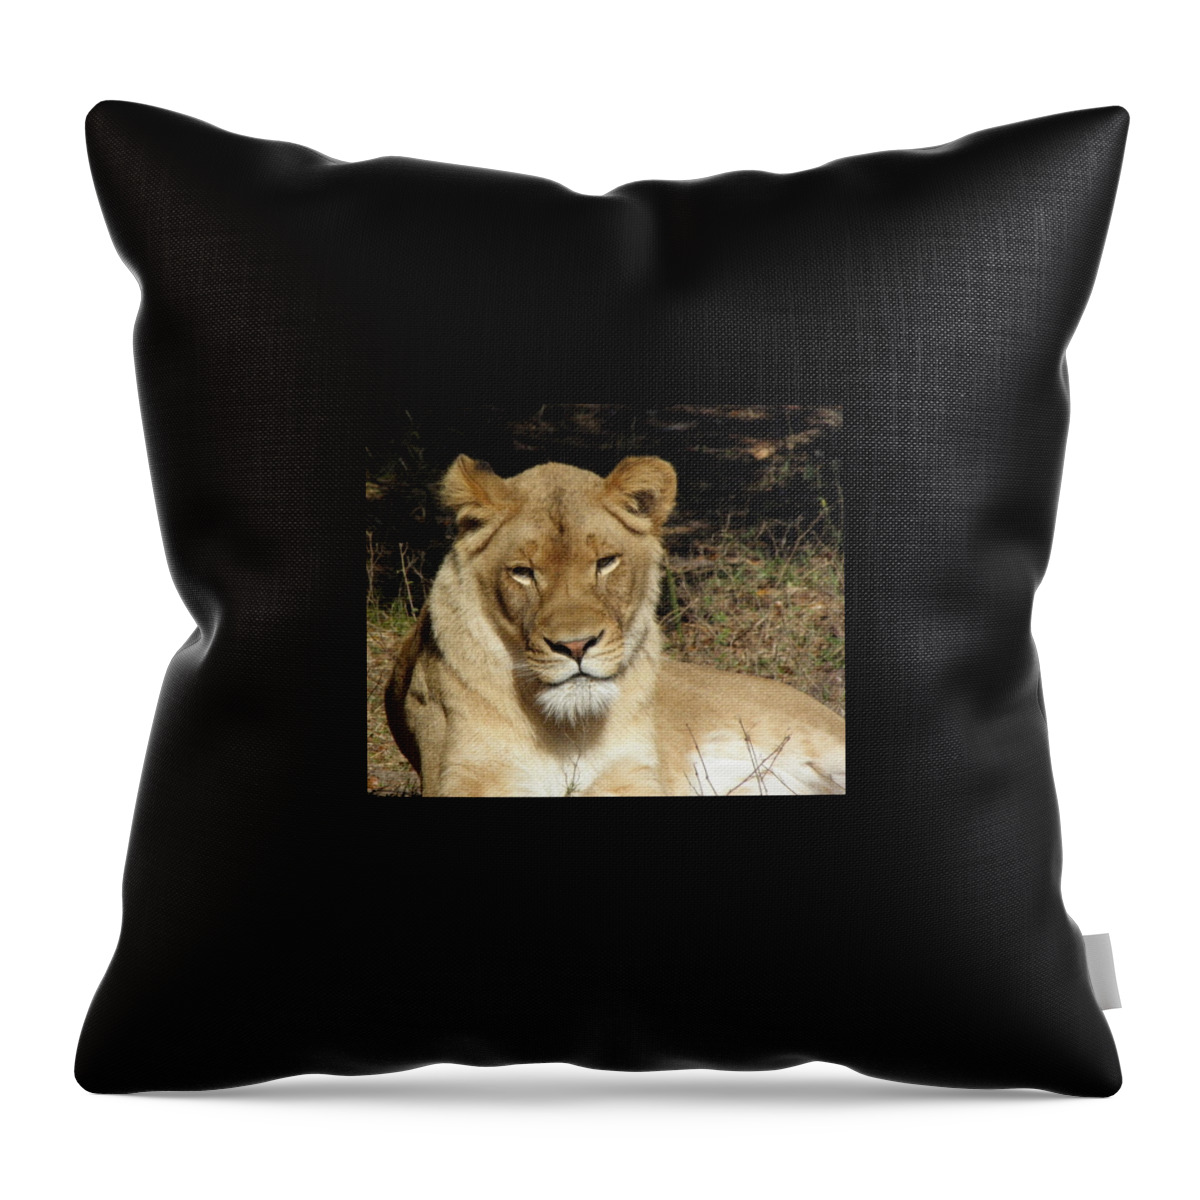 Lioness Throw Pillow featuring the photograph Aww Tilt by Kim Galluzzo Wozniak